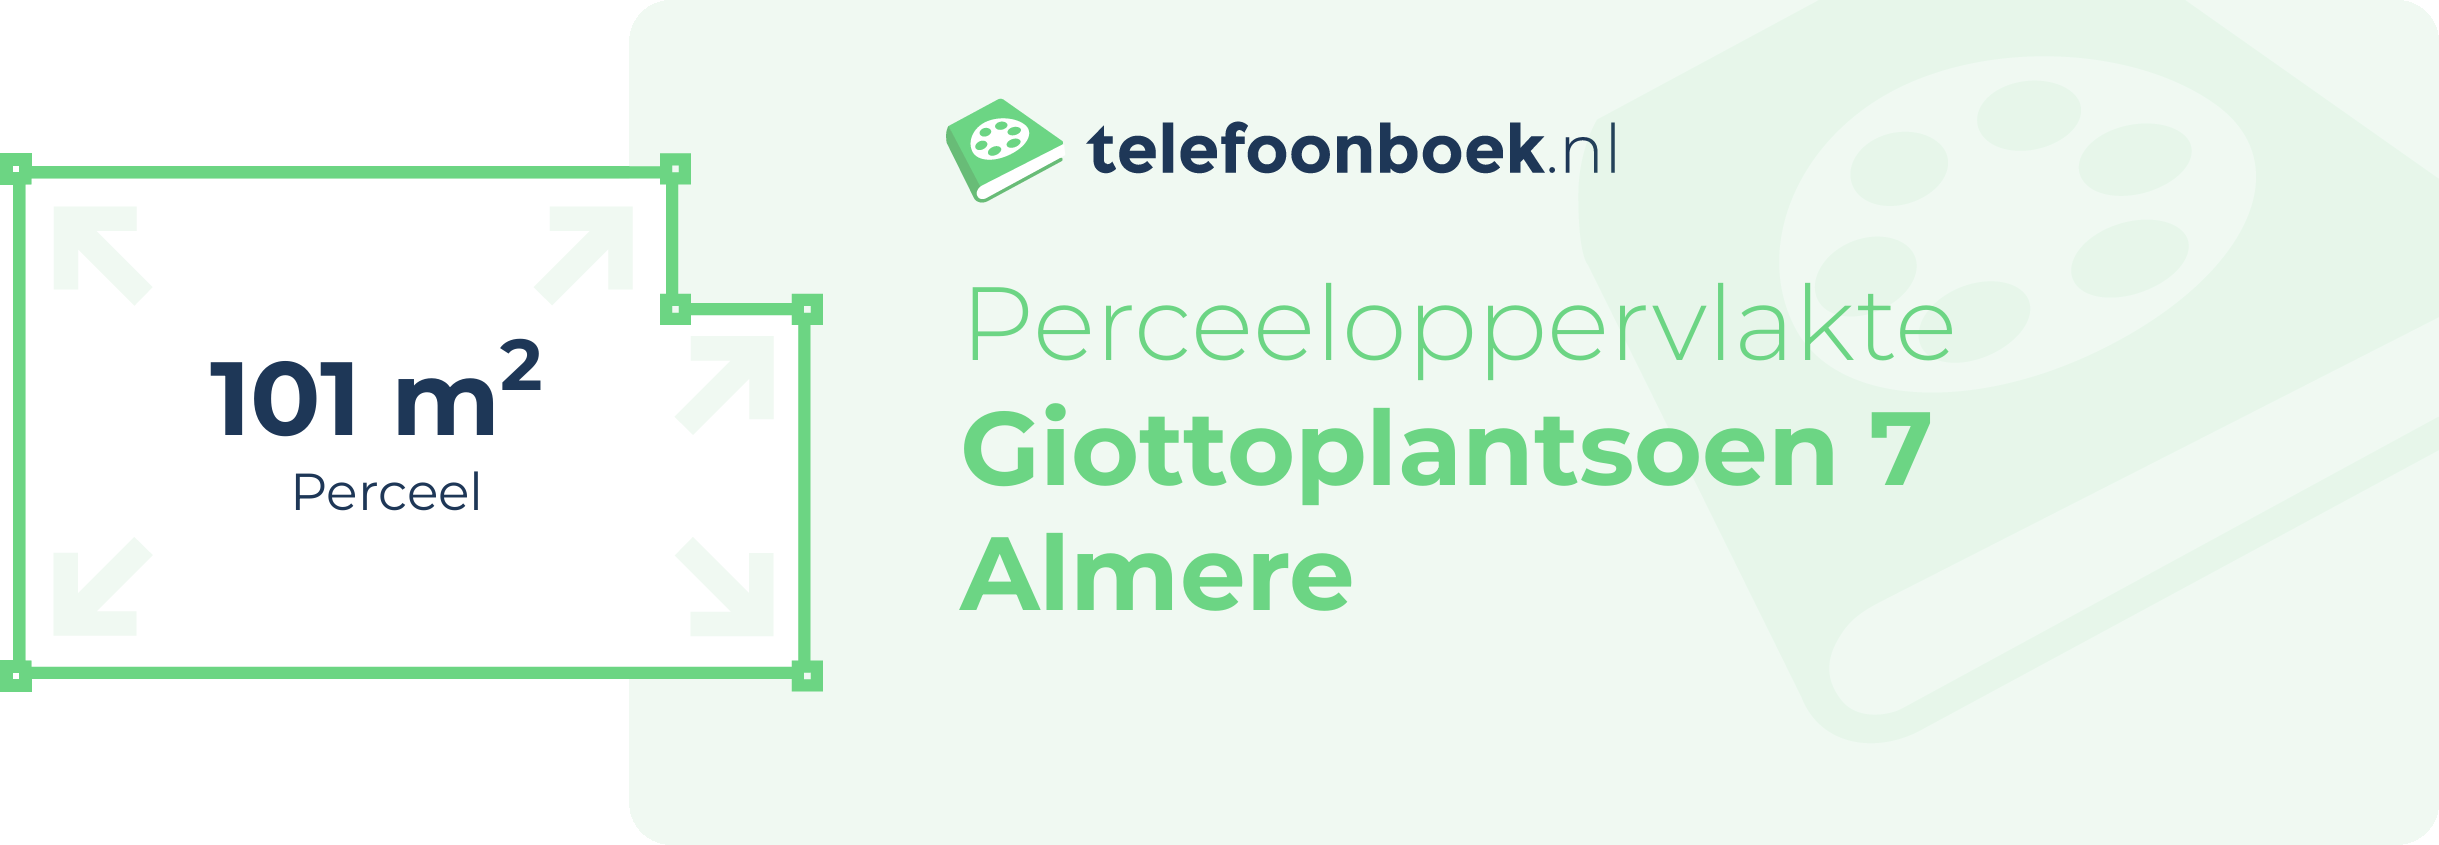 Perceeloppervlakte Giottoplantsoen 7 Almere